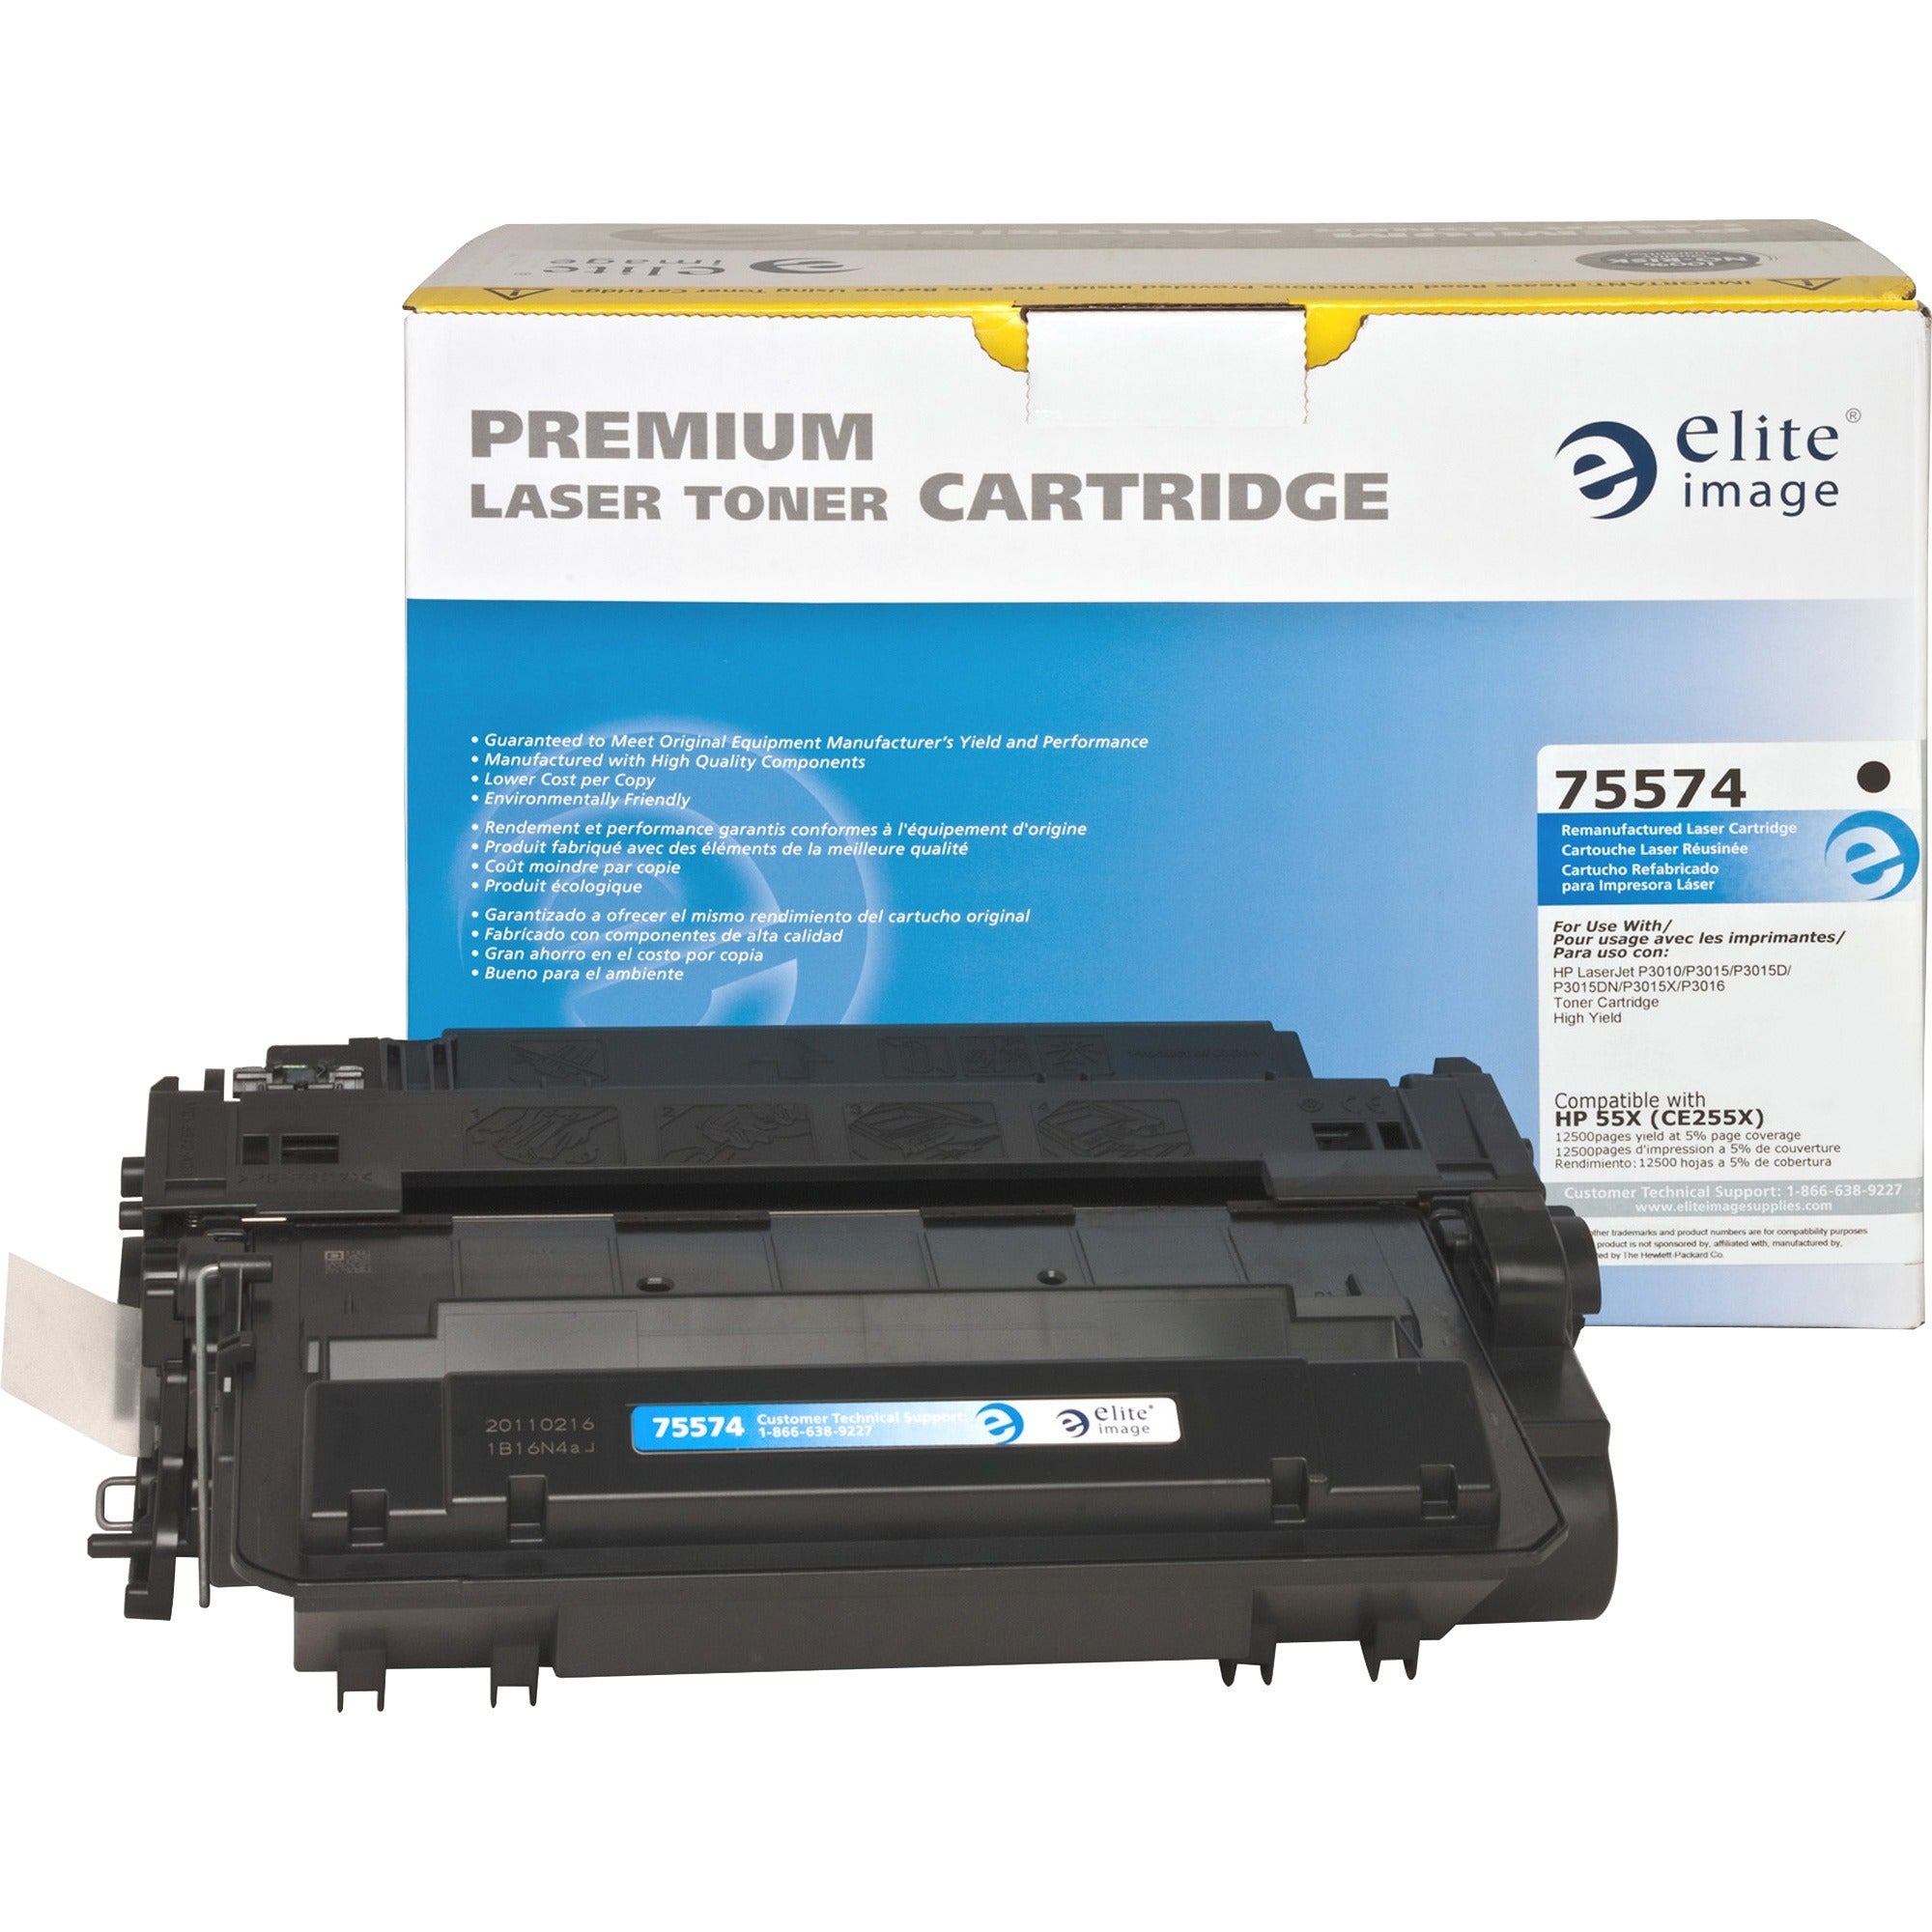 Elite Image Remanufactured Toner Cartridge - Alternative for HP 55X (CE255X) - Laser - 12500 Pages - Black - 1 Each - 1